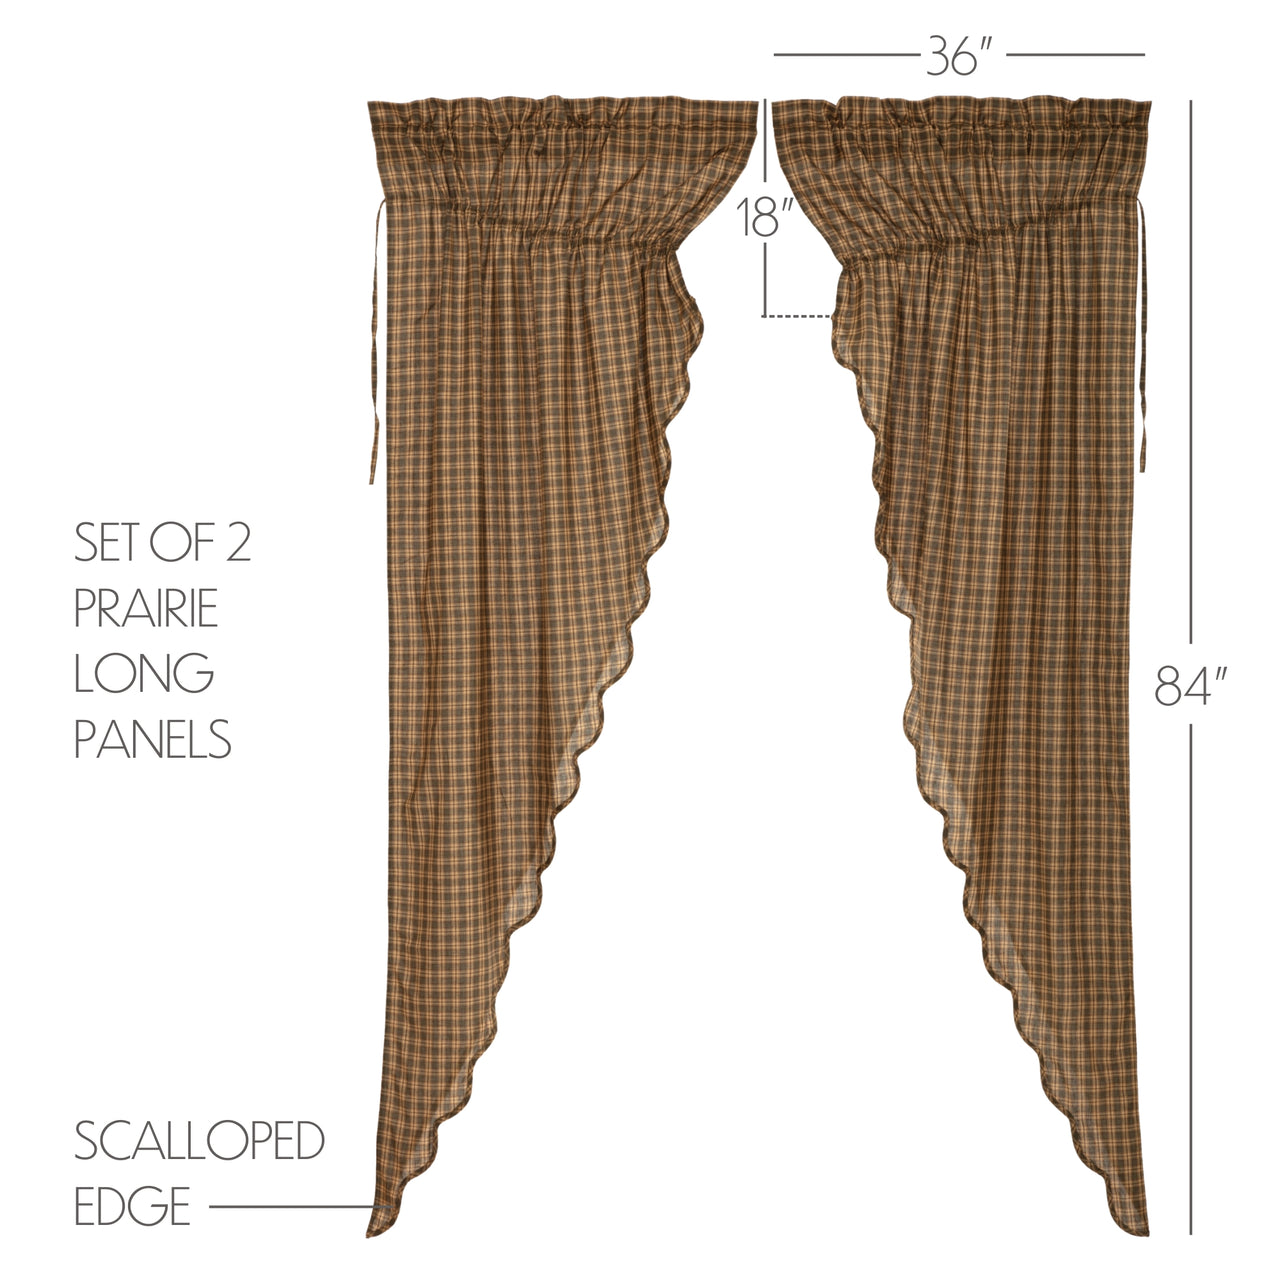 Cedar Ridge Prairie Long Panel Curtain Scalloped Set of 2 84x36x18 VHC Brands